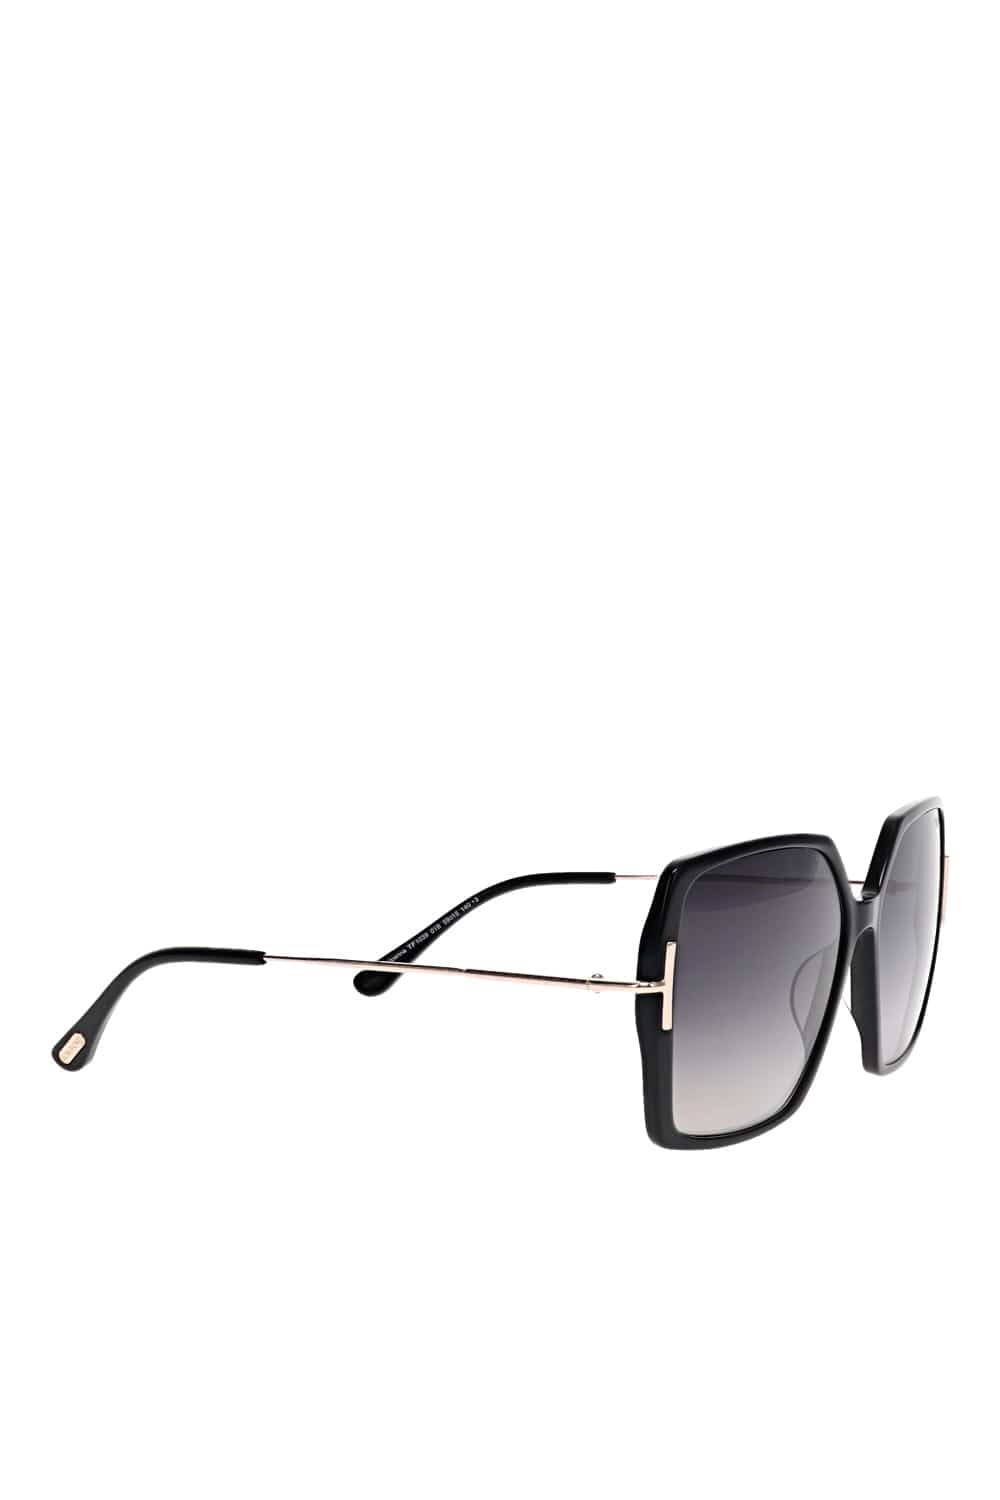 Tom Ford Eyewear FT1039 Shiny Black Rose Gold Sunglasses FT1039 Black/Smoke